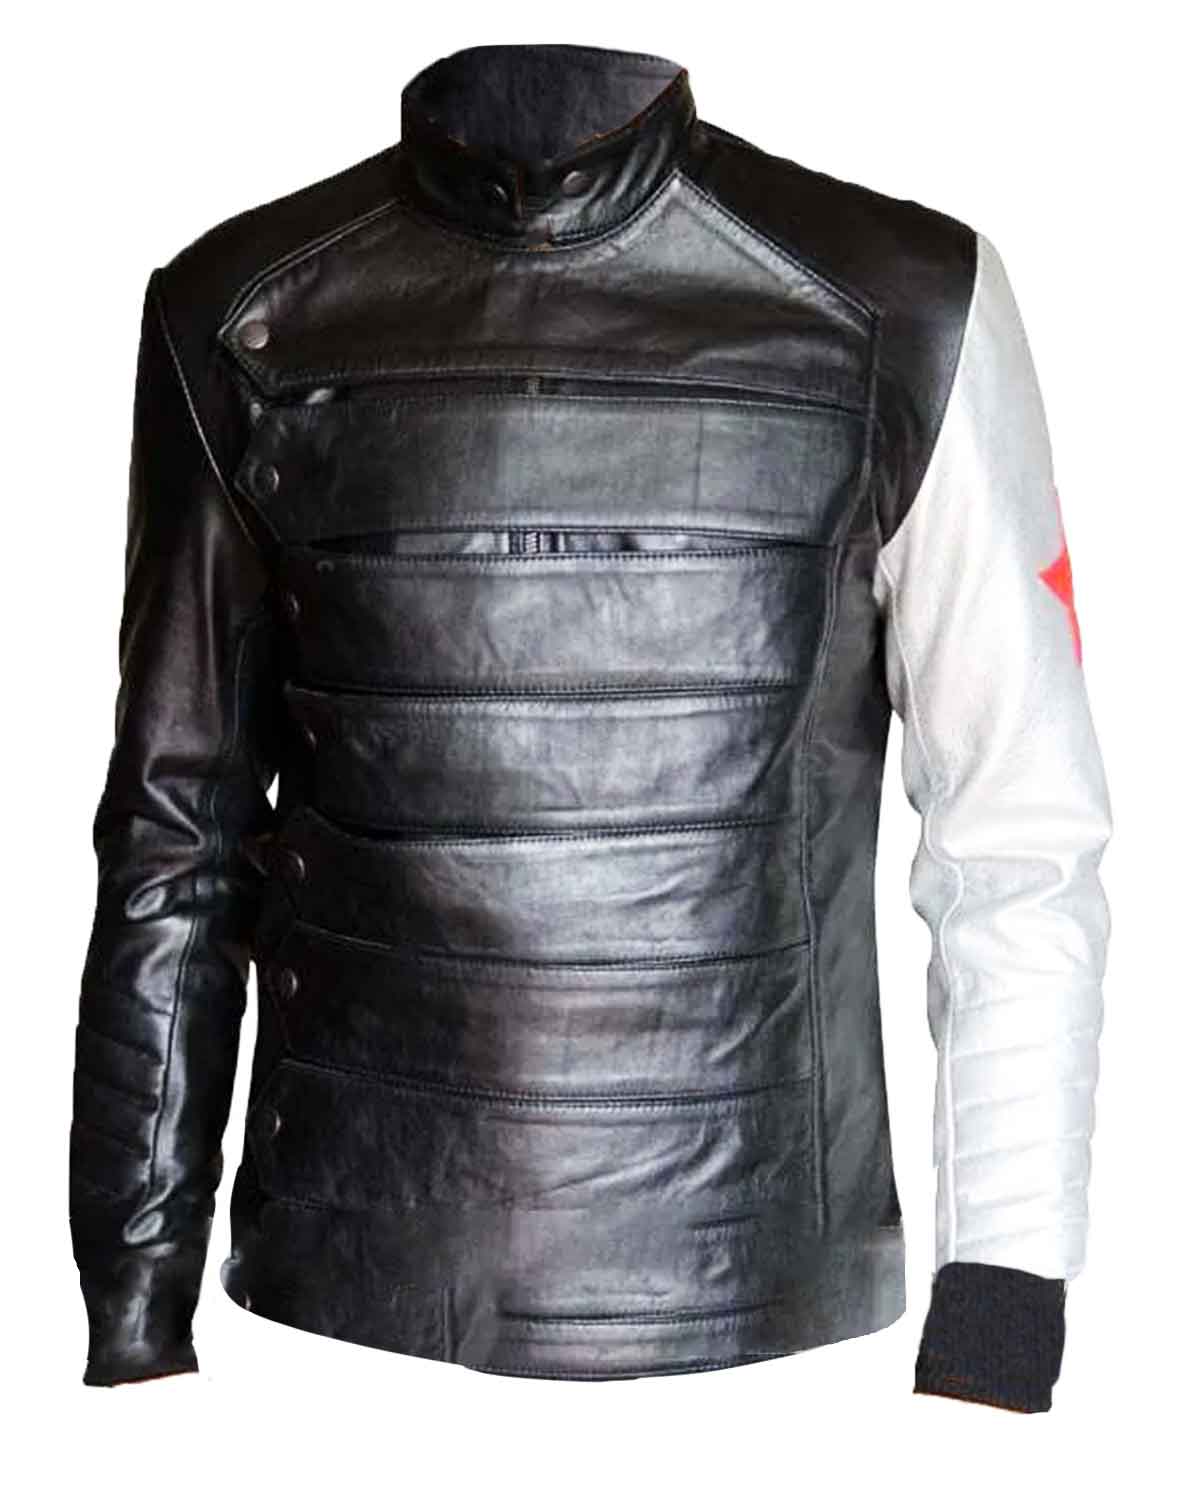 Bucky Barnes Silver Armor Leather Jacket | Elite Jacket